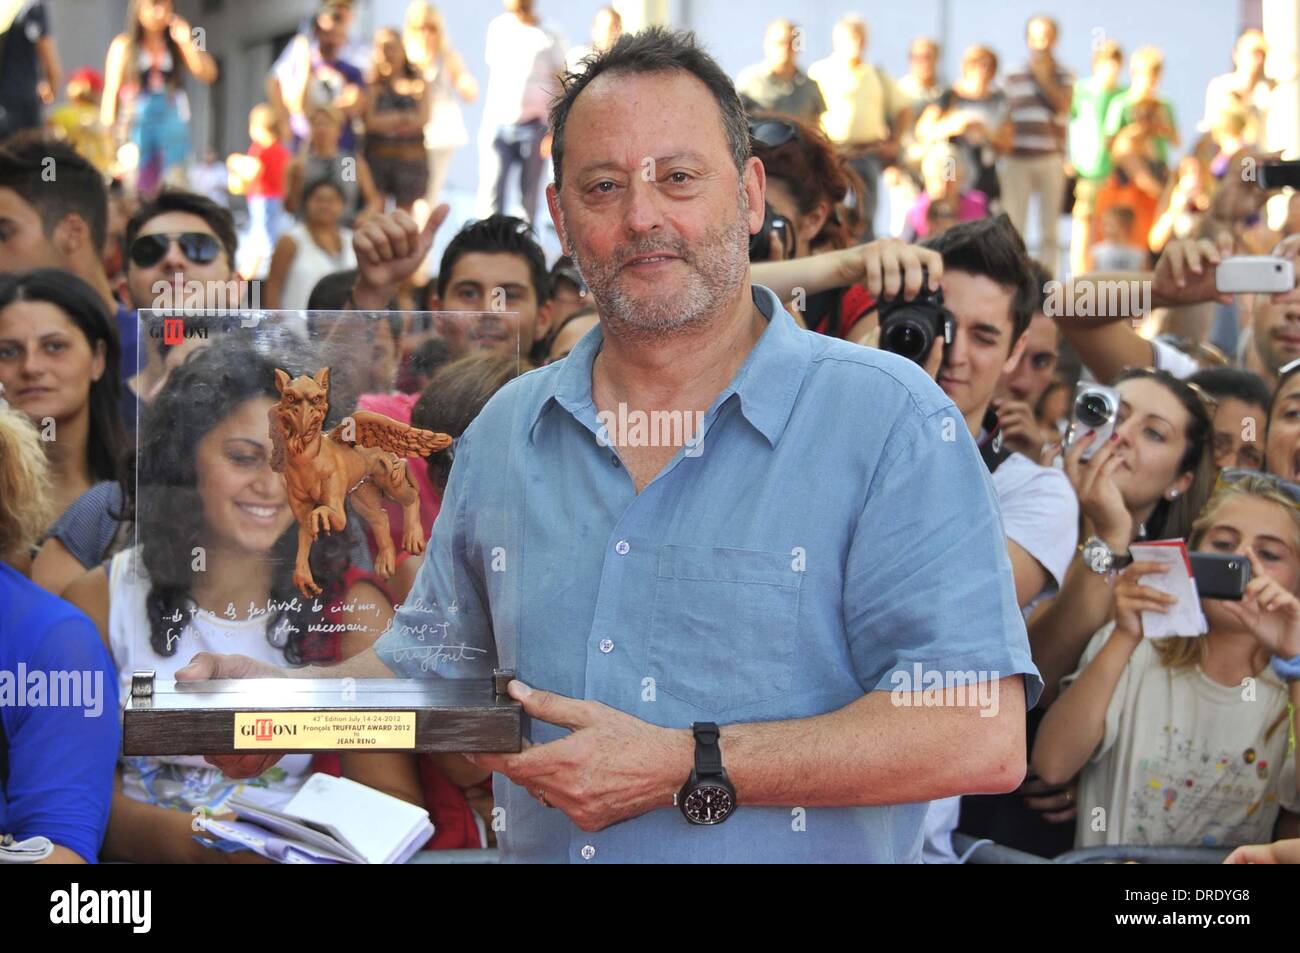 Jean Reno  with the Truffaut Award during the 42nd Giffoni Film Festival  Giffoni, Italy - 21.07.12 Stock Photo